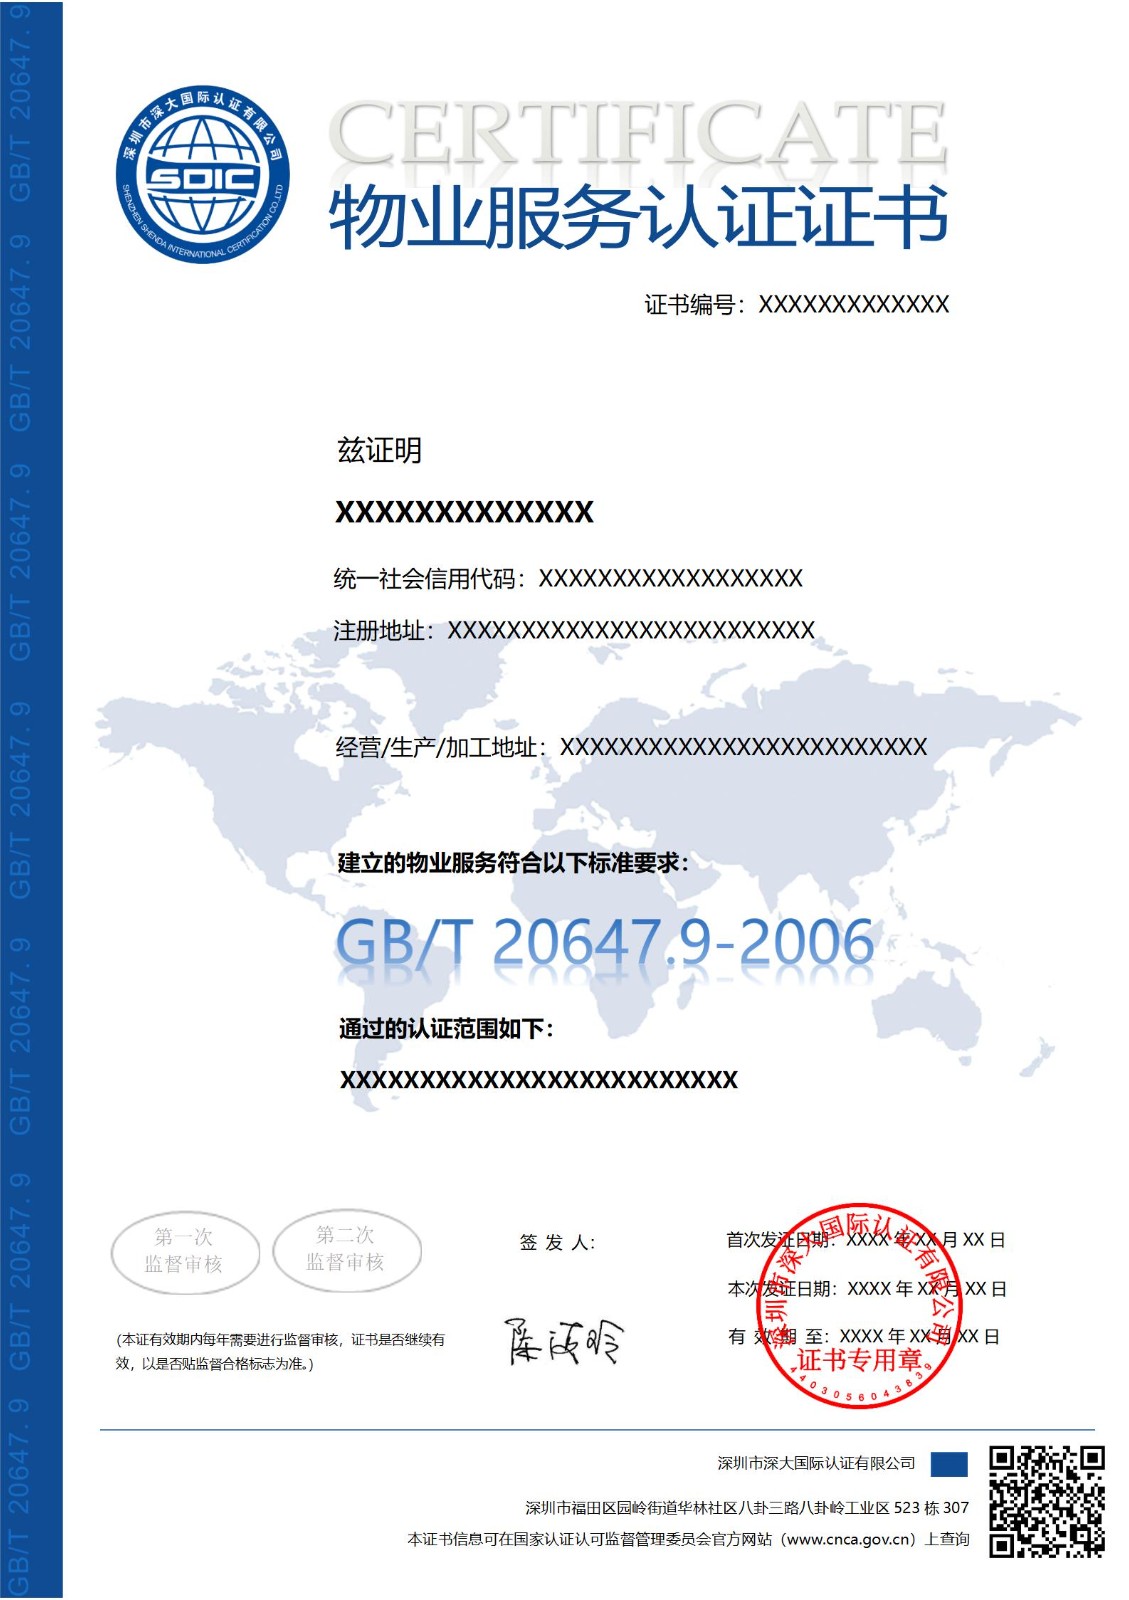 GB/T 20647.9物业服务认证证书